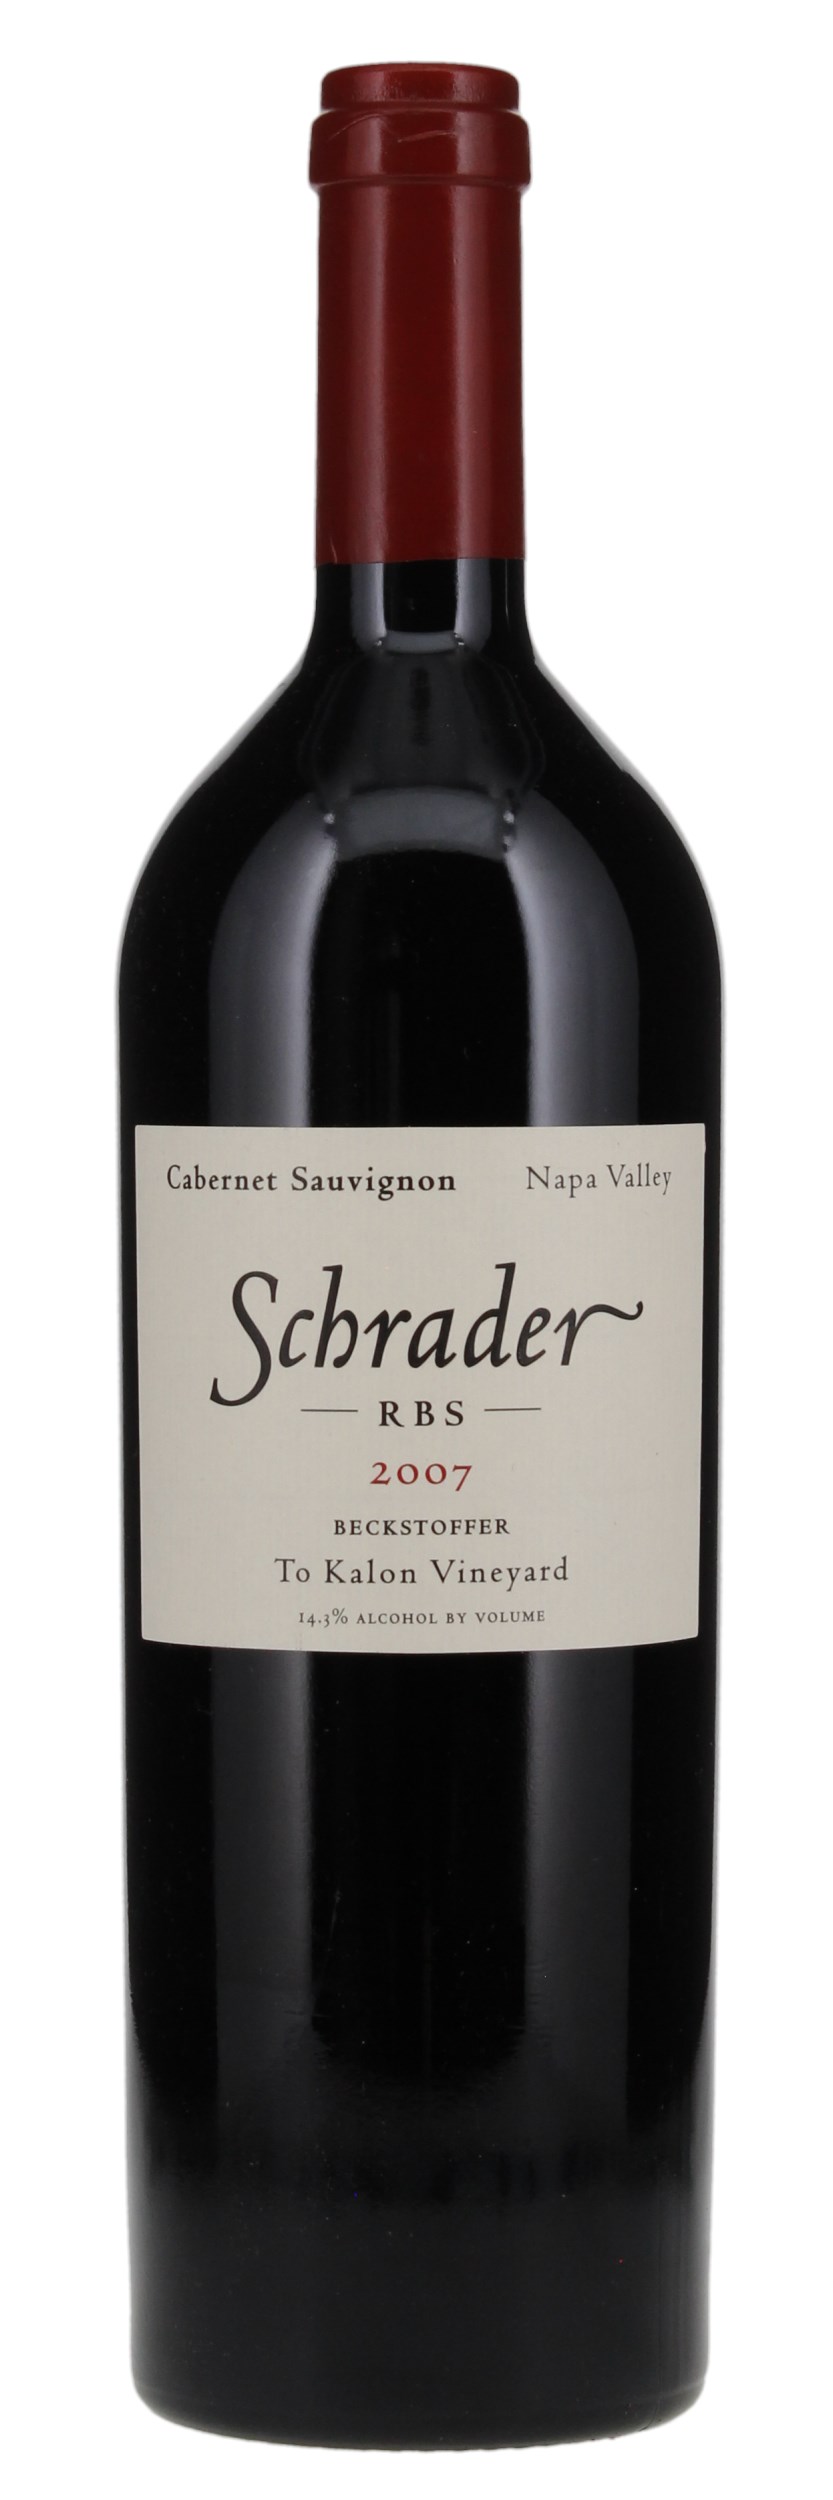 2007 Schrader RBS Beckstoffer To Kalon Vineyard Cabernet Sauvignon, 750ml